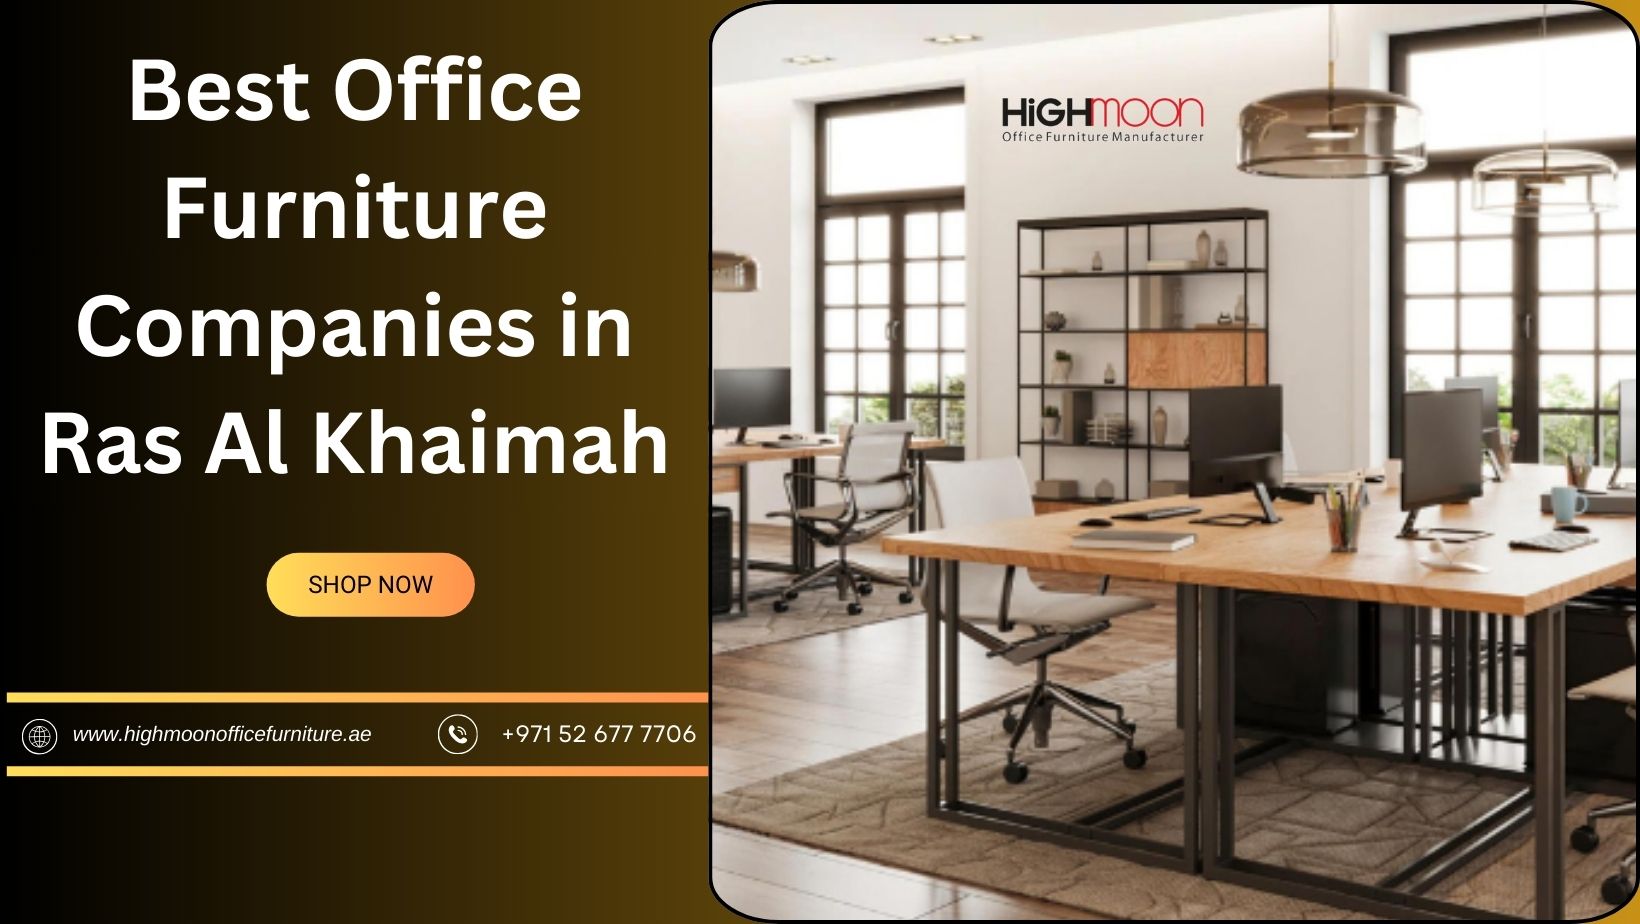 Best Office Furniture Companies in Ras Al Khaimah